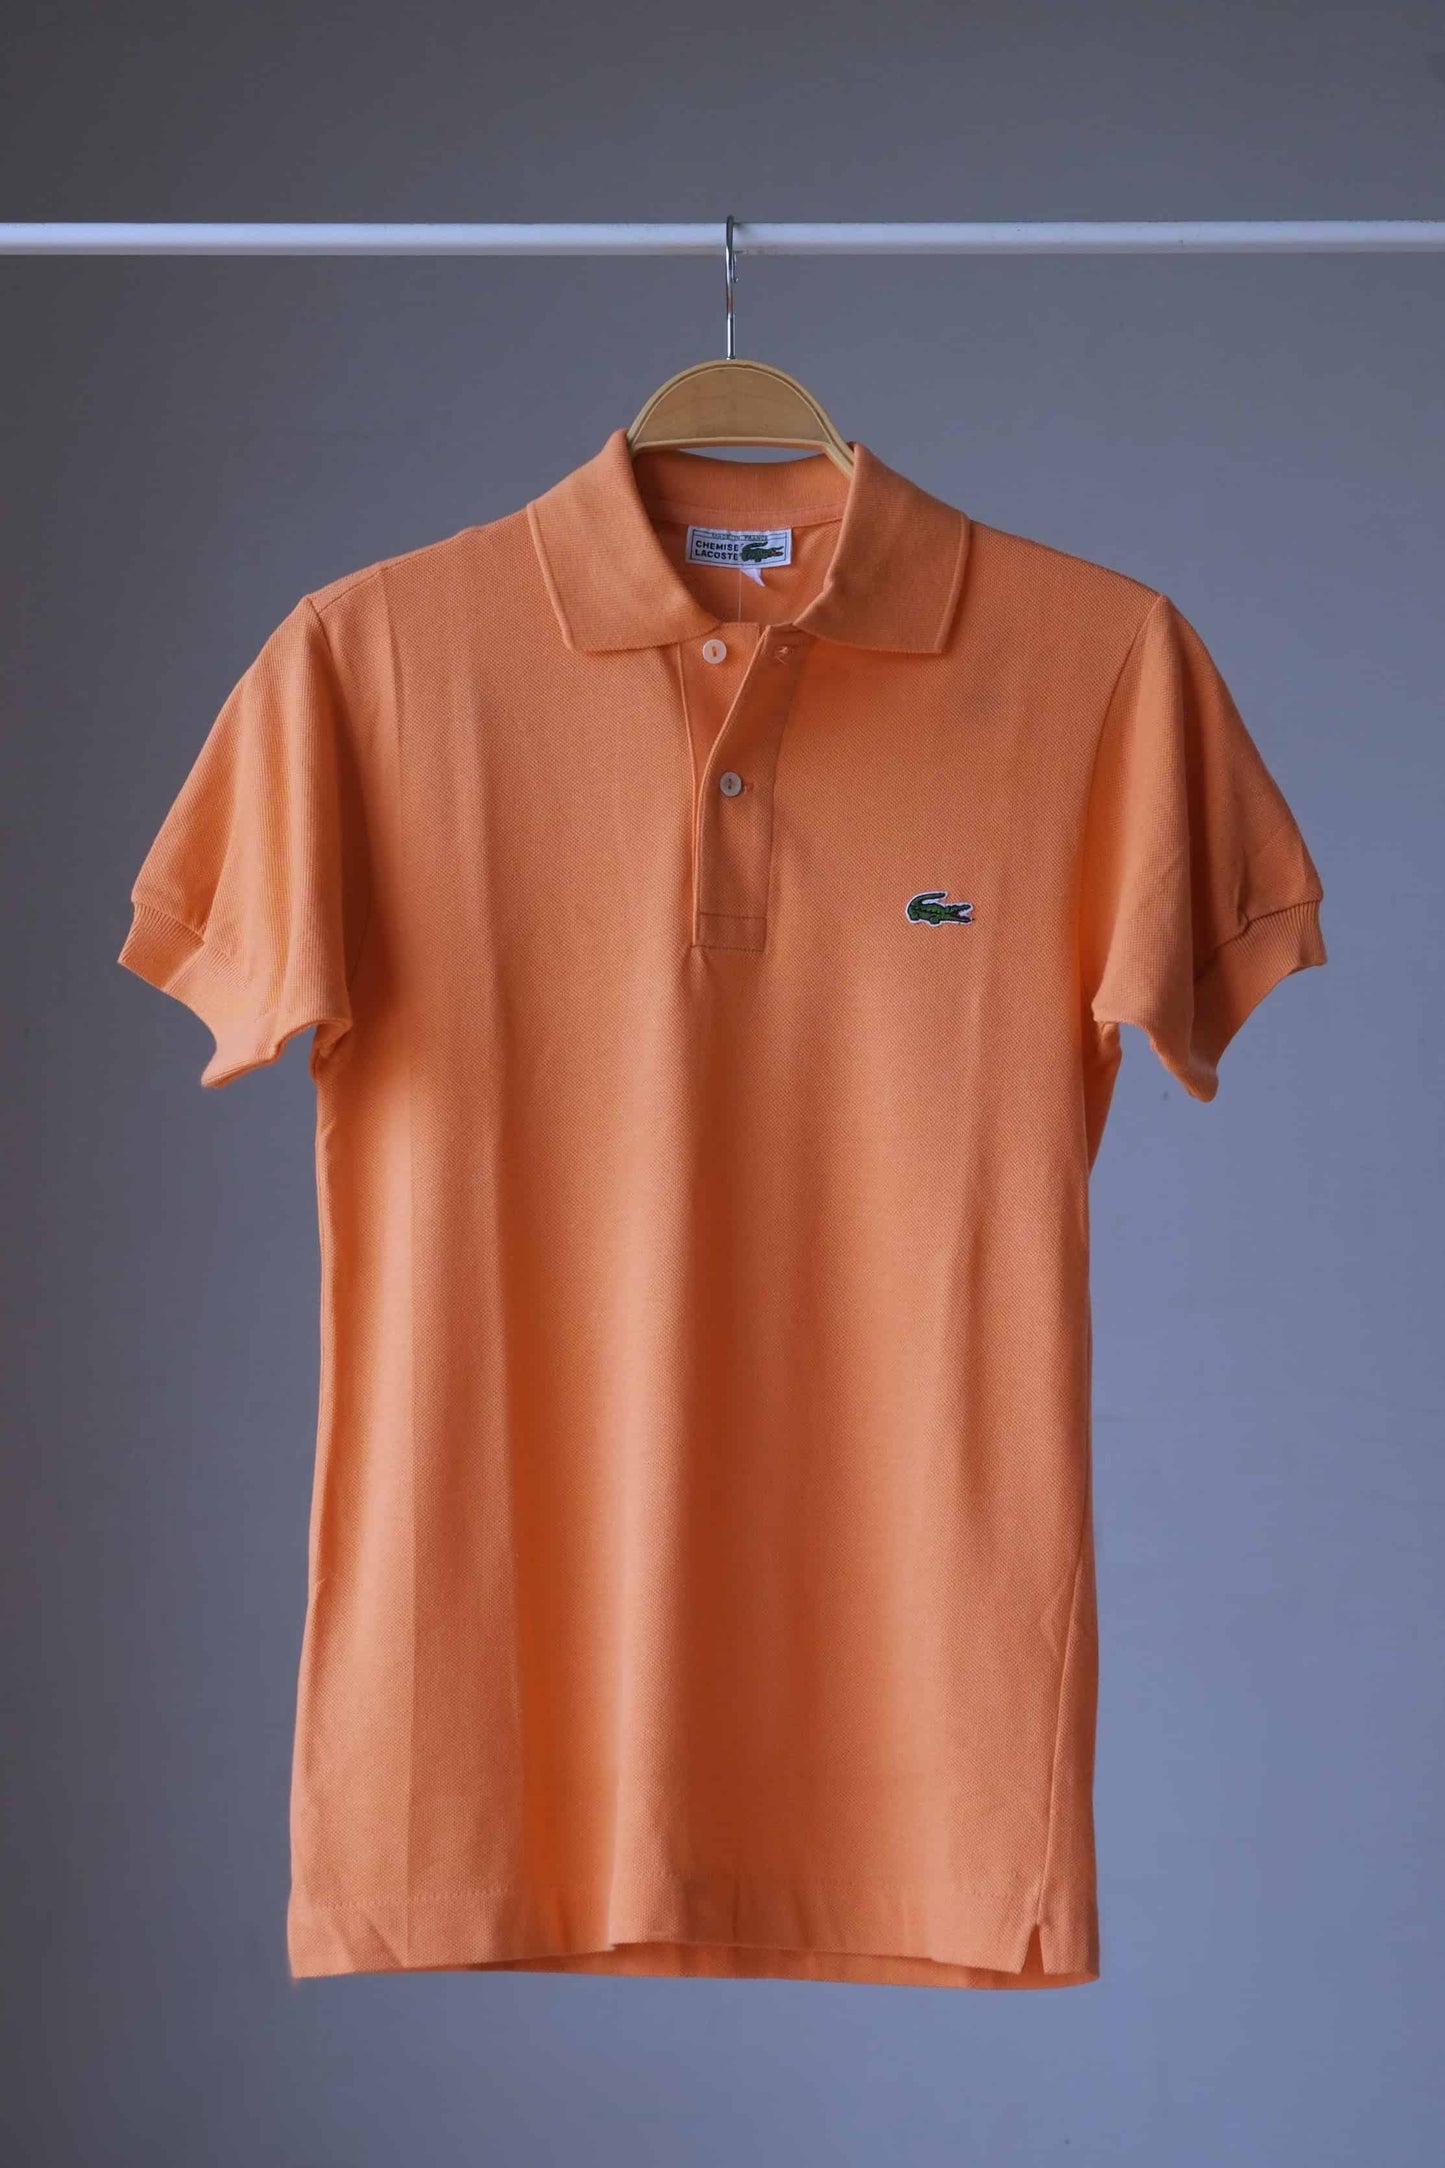 LACOSTE Retro Shirt in peach orange color on hanger